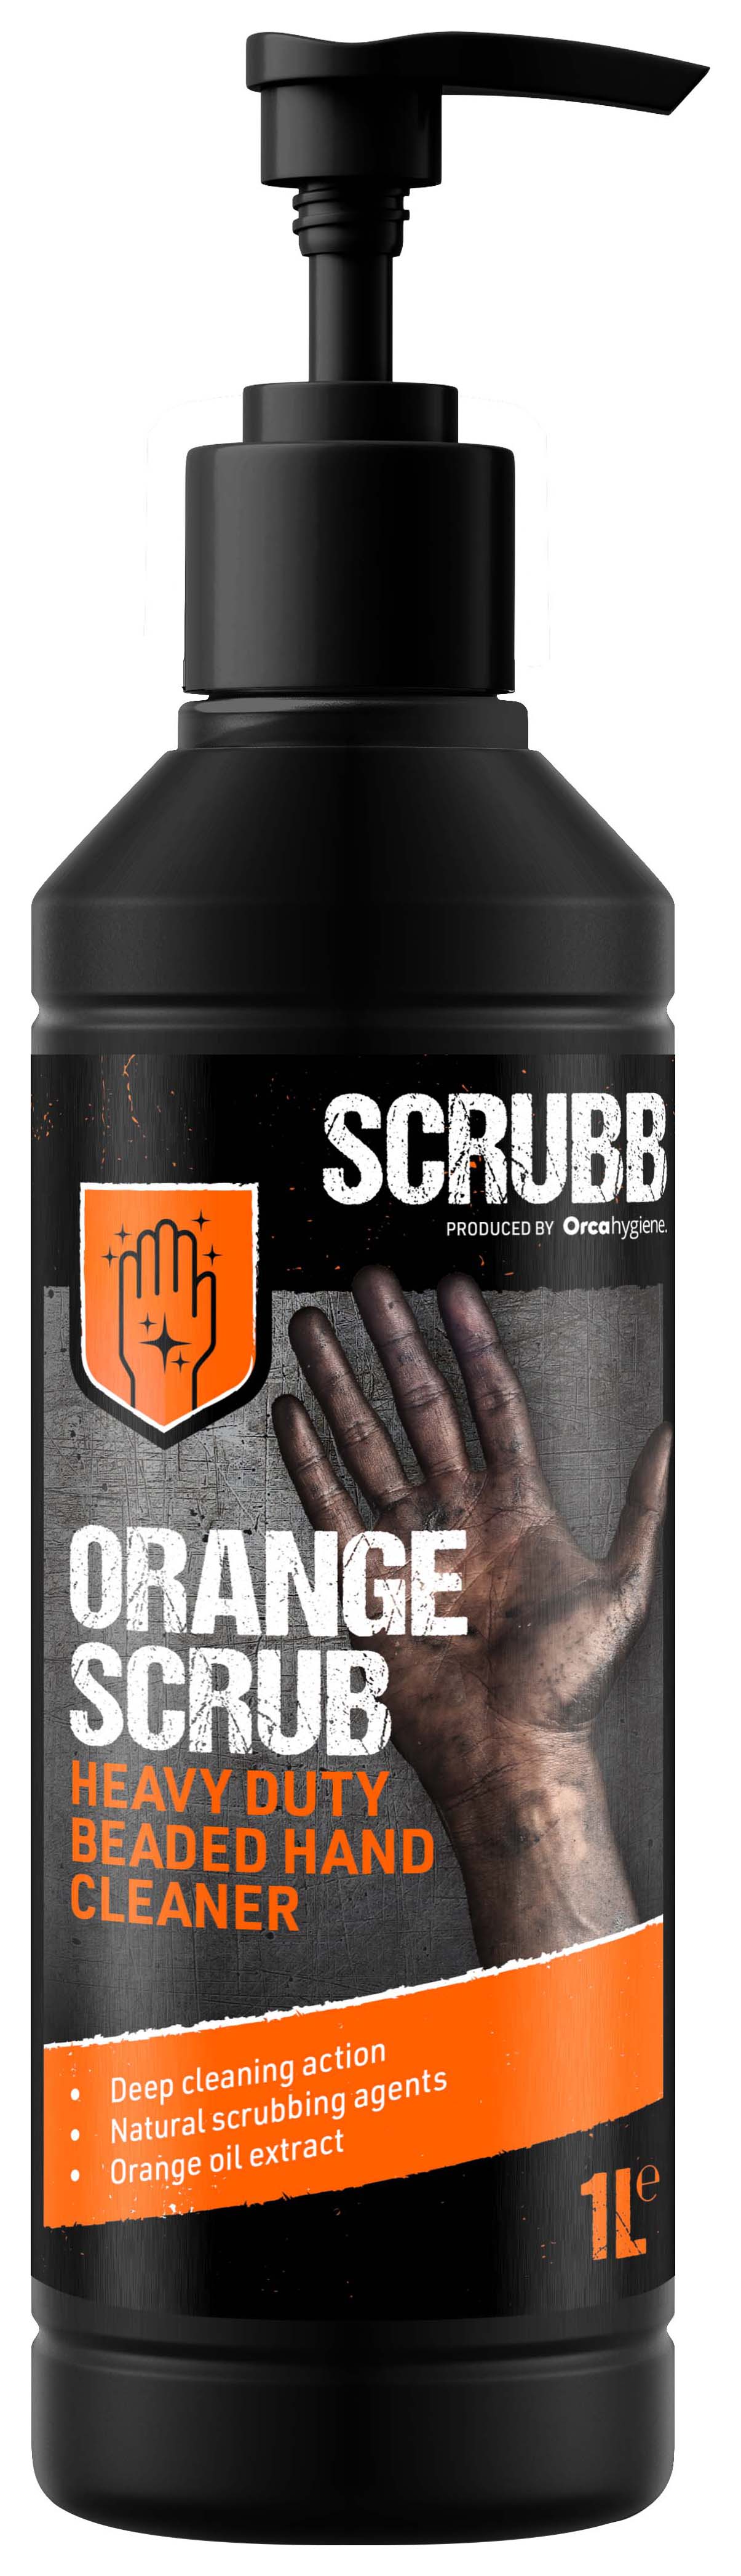 SCRUBB Orange Scrub Heavy Duty Beaded Hand Cleaner - 1L